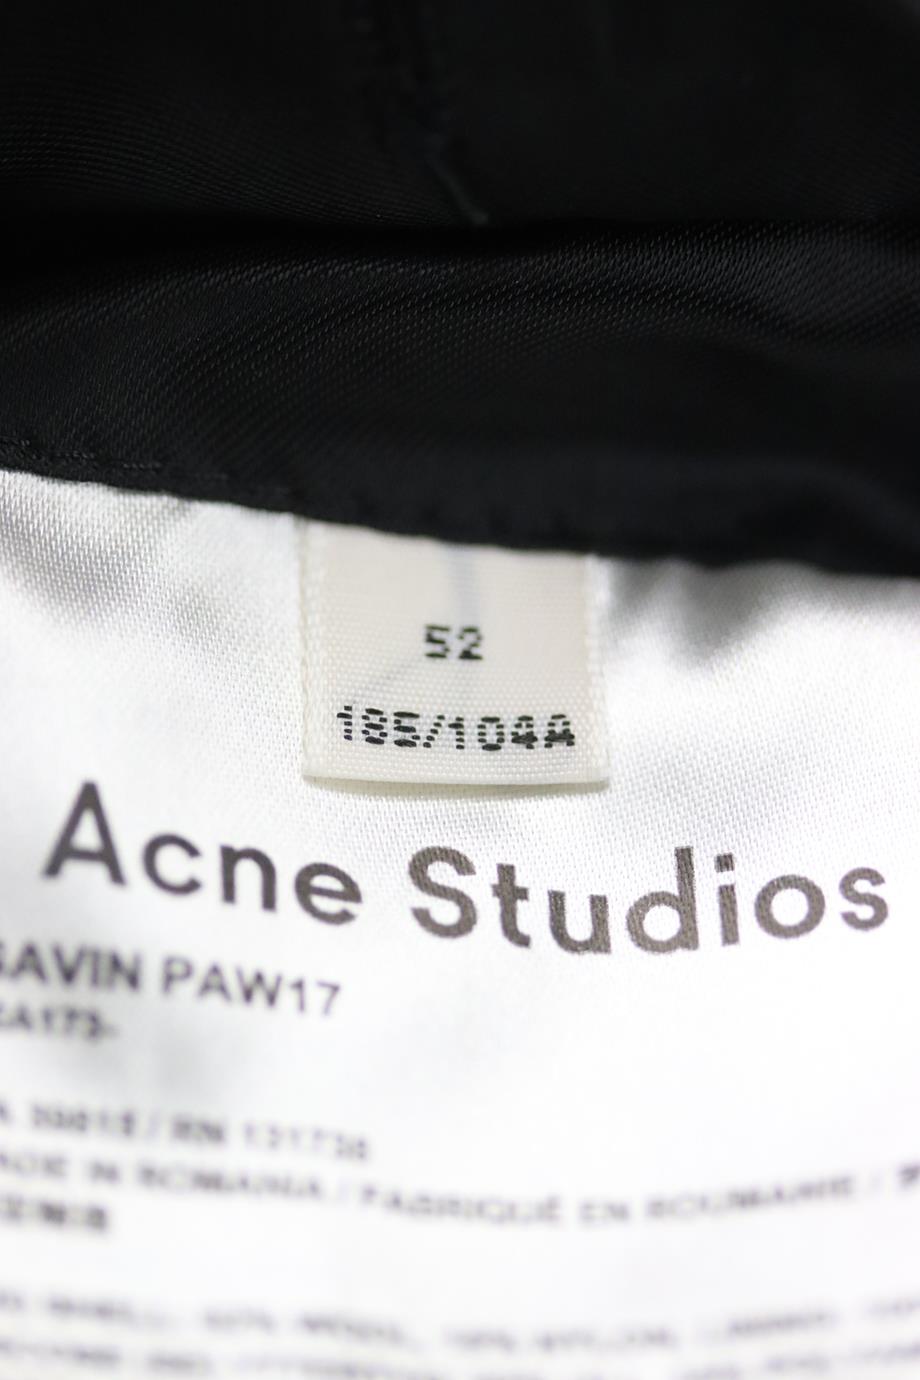 ACNE STUDIOS MEN'S WOOL COAT cne Studios Wool Coat IT 52 UK/US CHEST 42